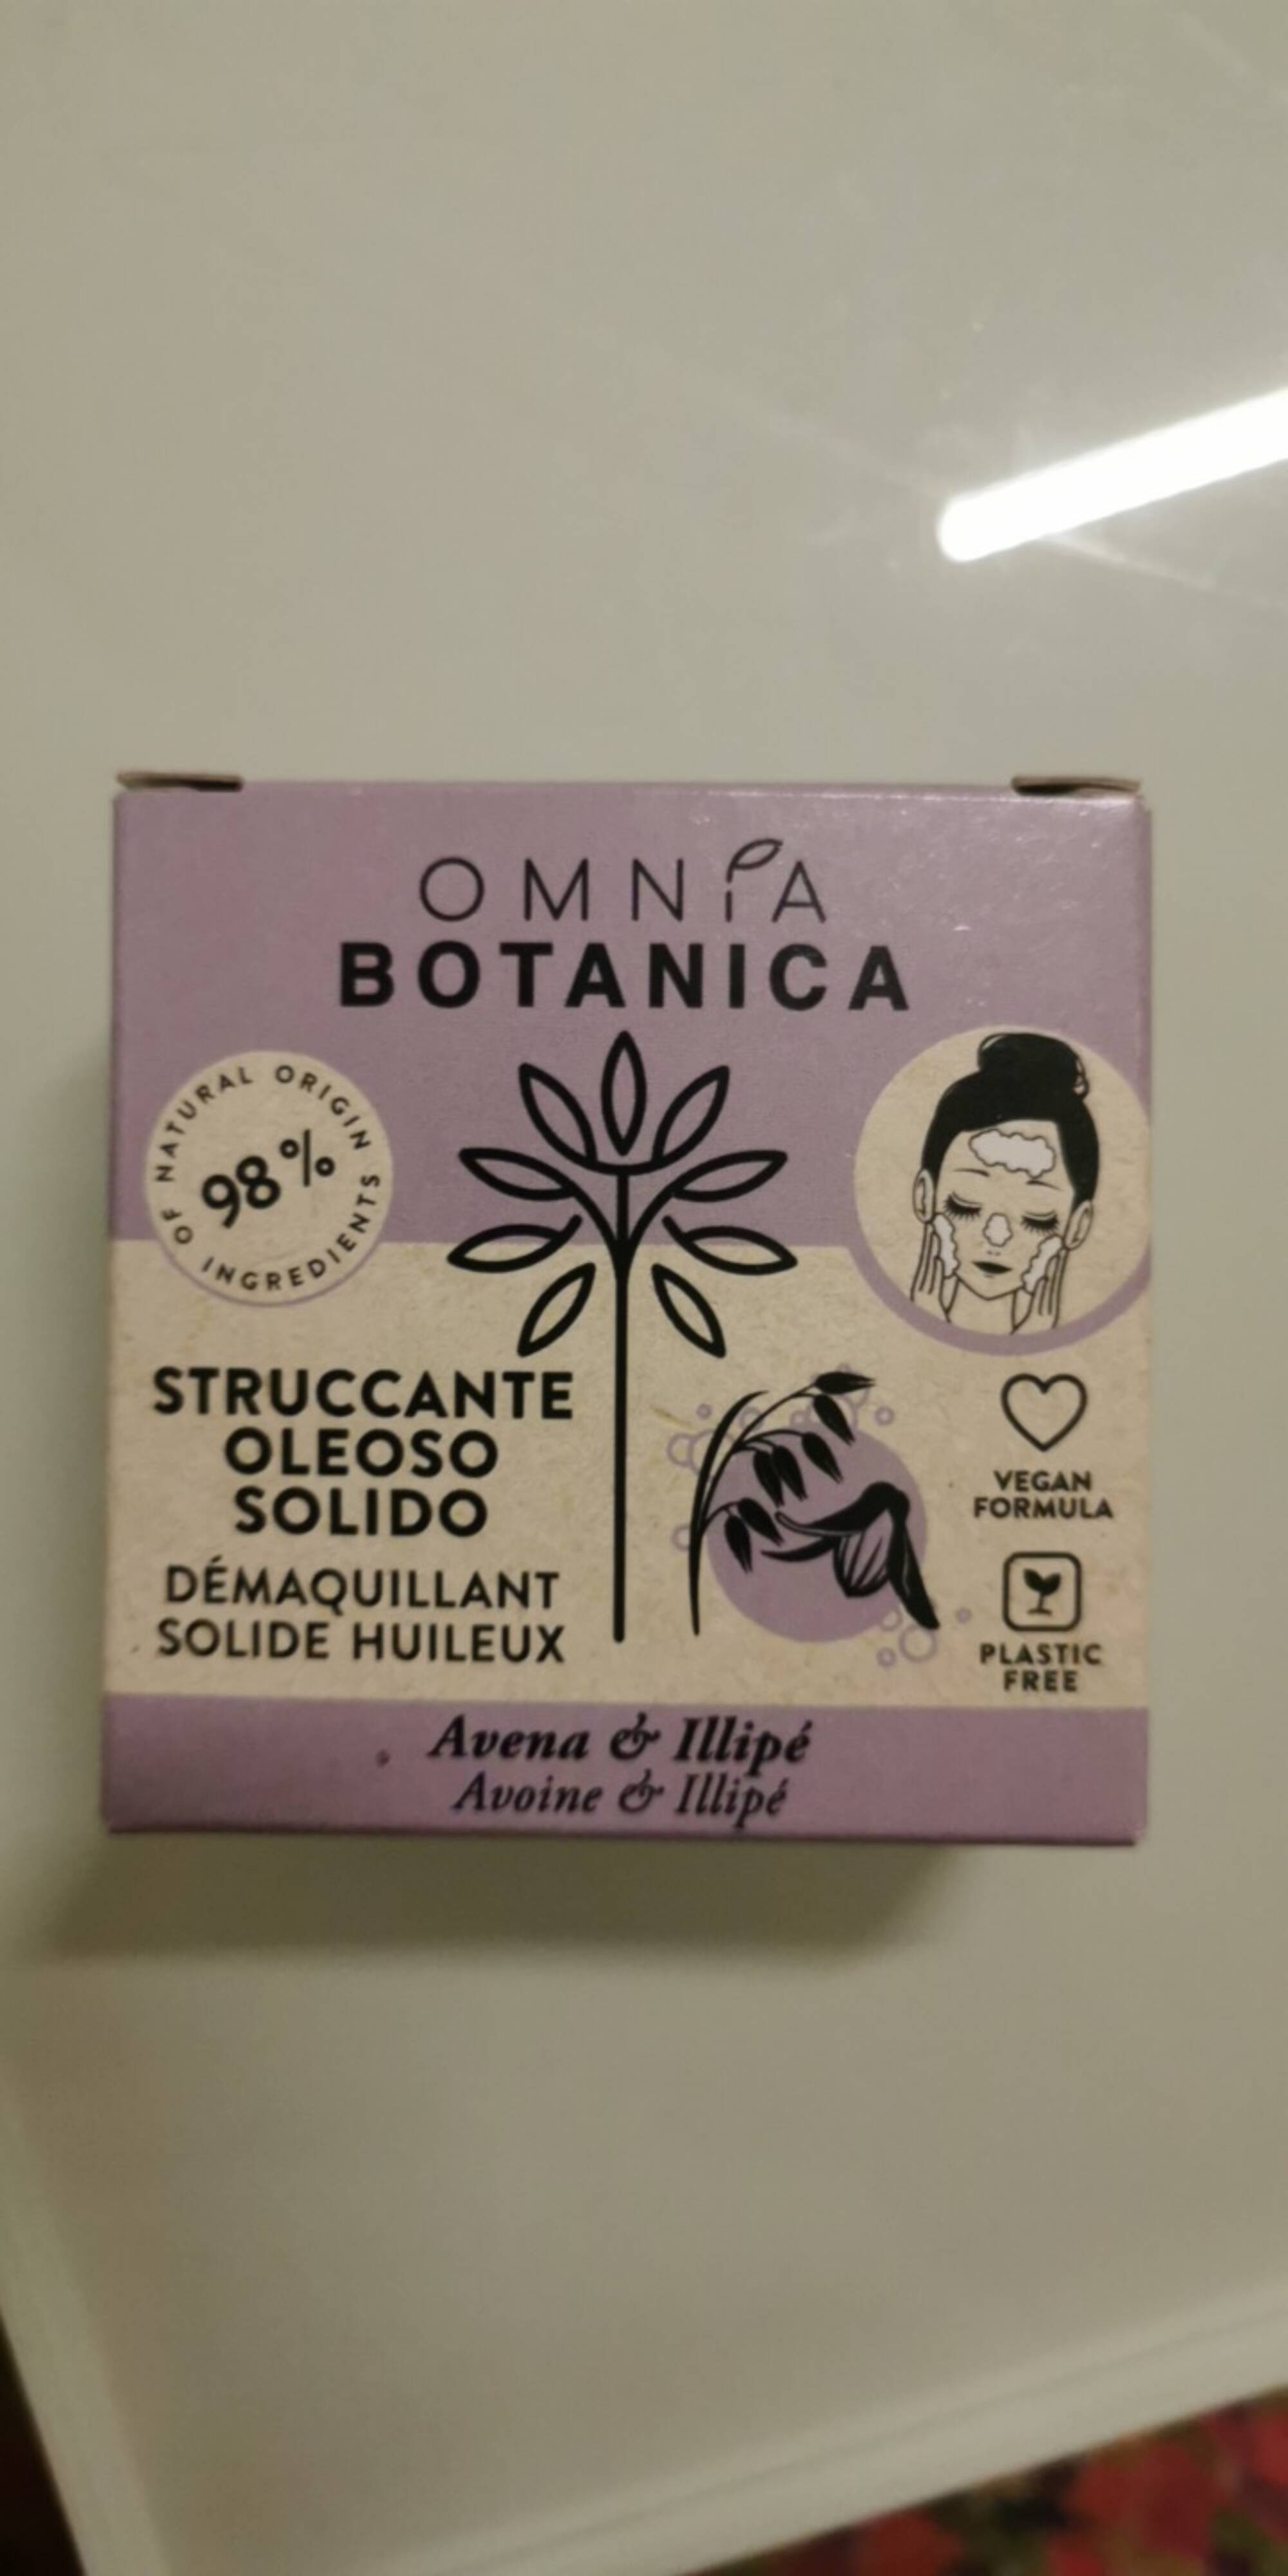 OMNIA BOTANICA - Démaquillant solide huileux